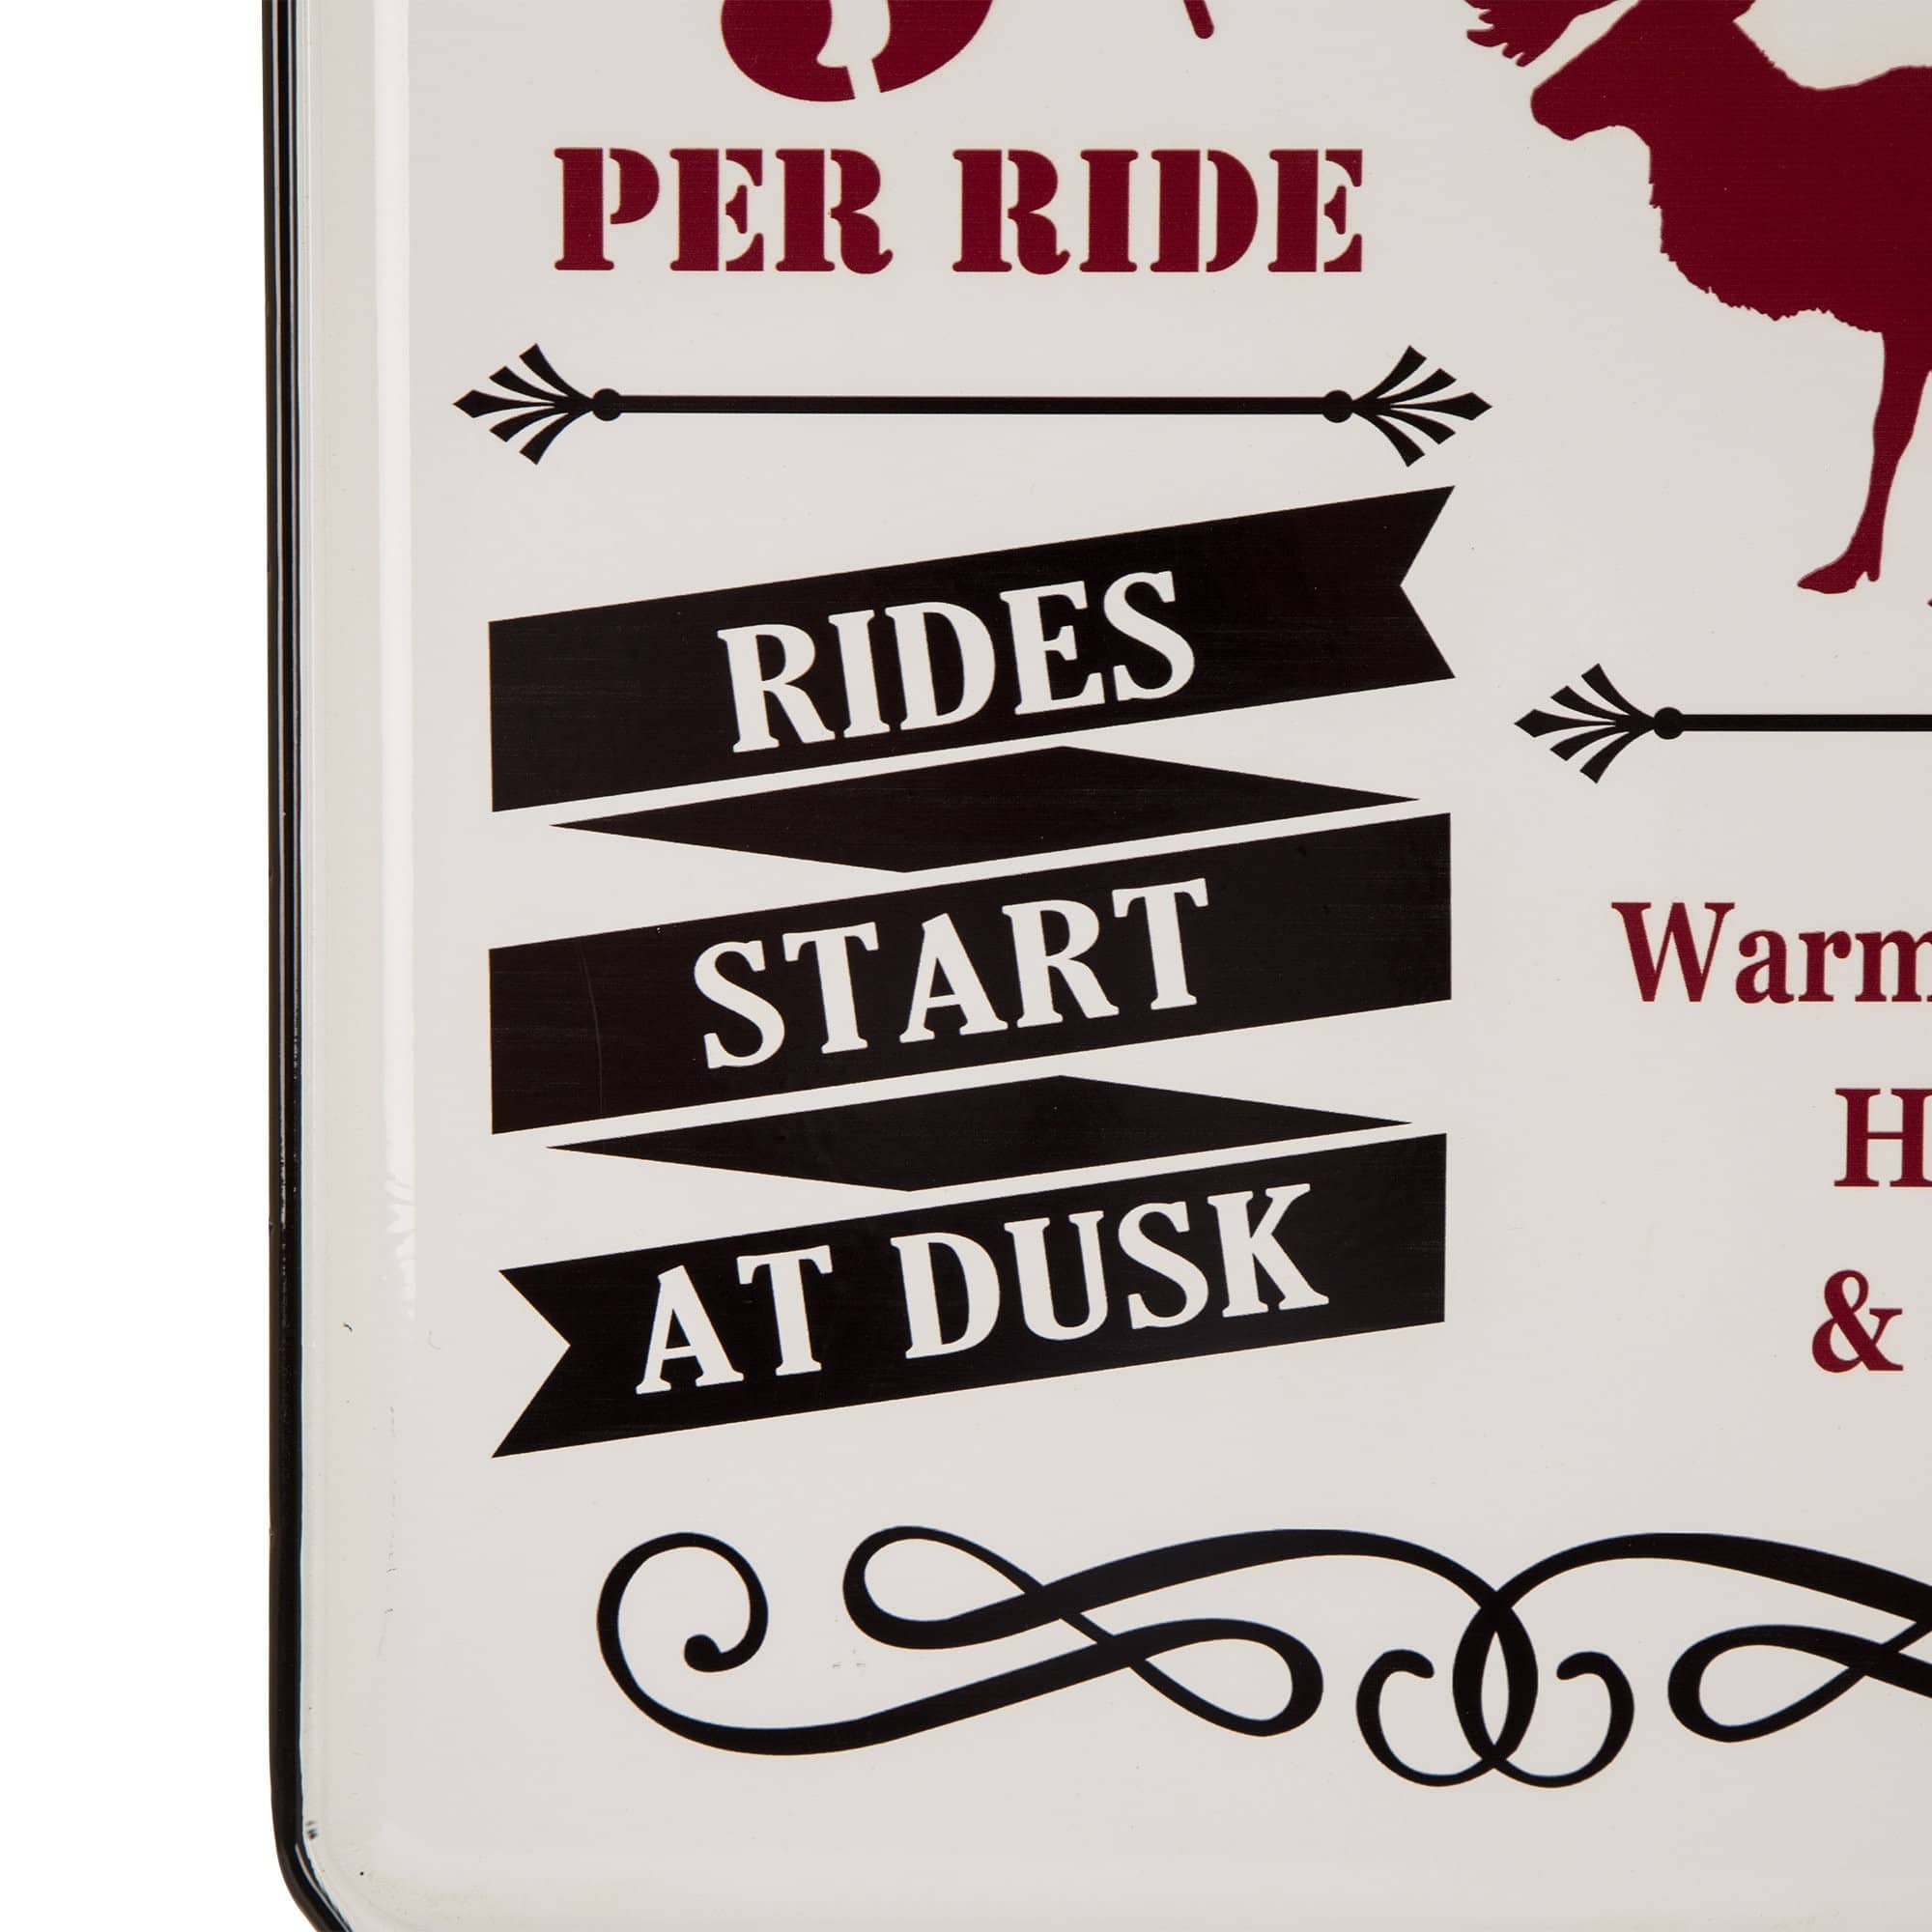 Glitzhome&#xAE; Reindeer Sleigh Rides Farmhouse Metal Enamel Sign